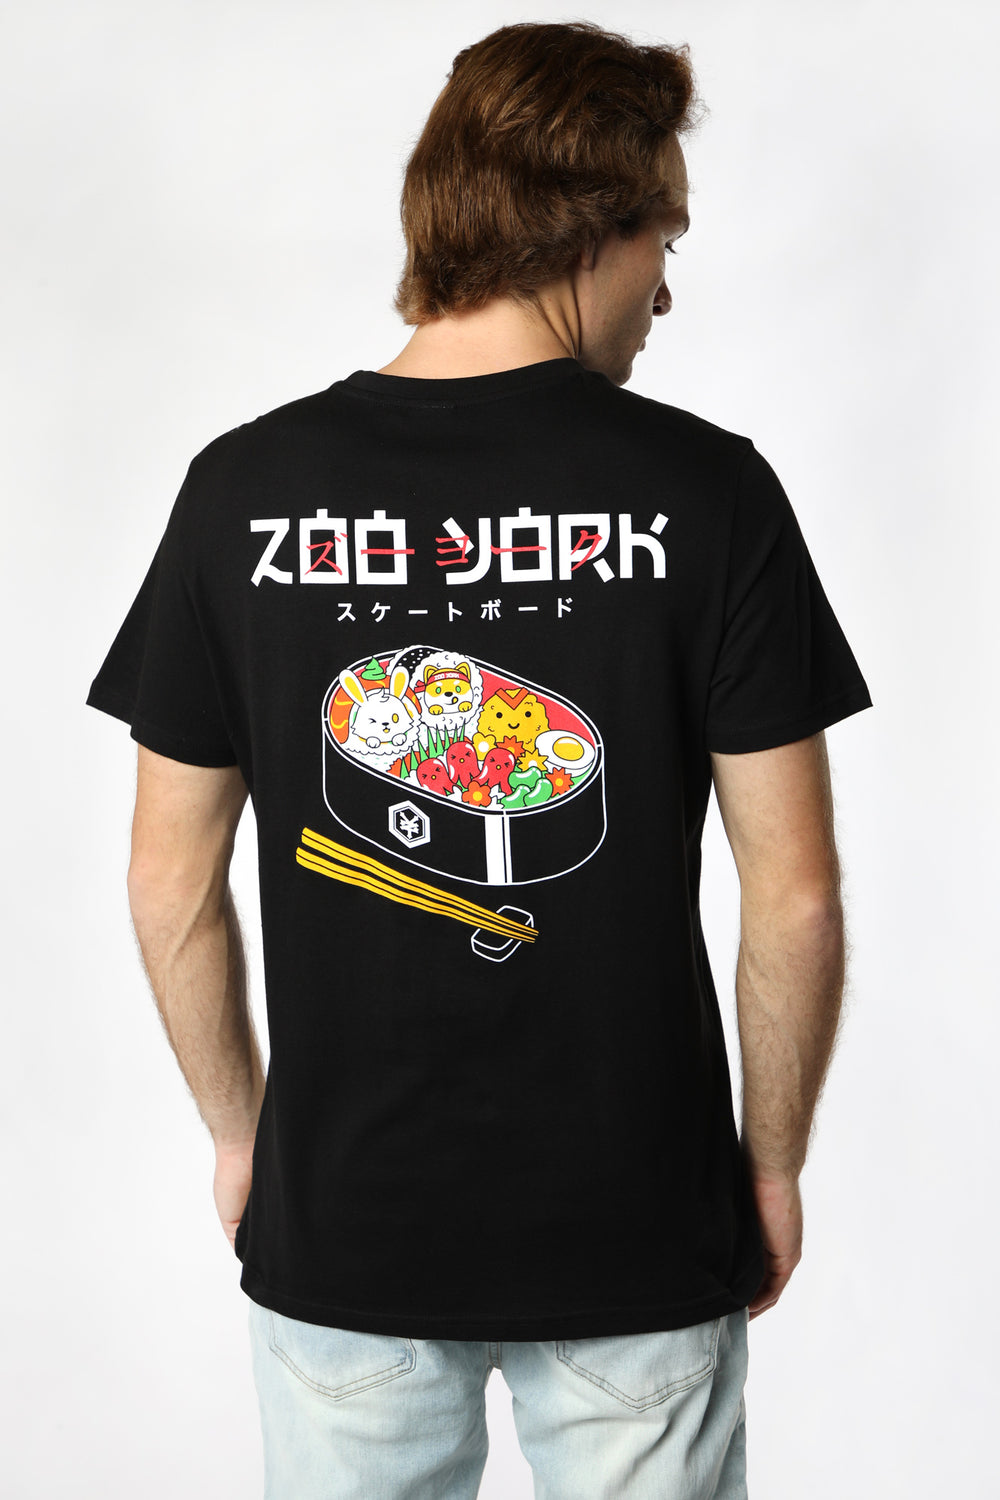 T-Shirt Imprimé Sushi Zoo York Homme T-Shirt Imprimé Sushi Zoo York Homme